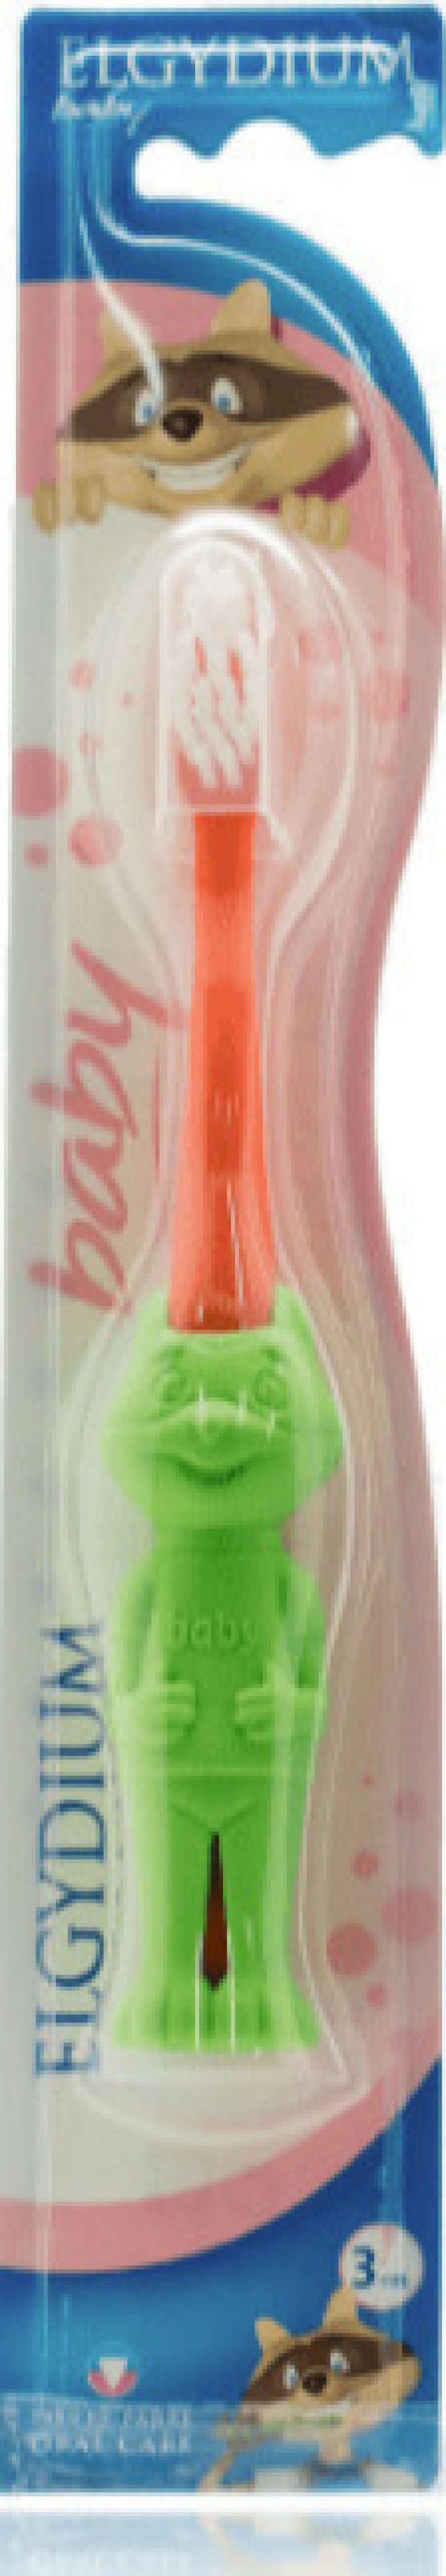 ELGYDIUM Baby Οδοντόβουρτσα για παιδιά μέχρι 2 ετών Πράσινο/Πορτοκαλί, 1τμχ